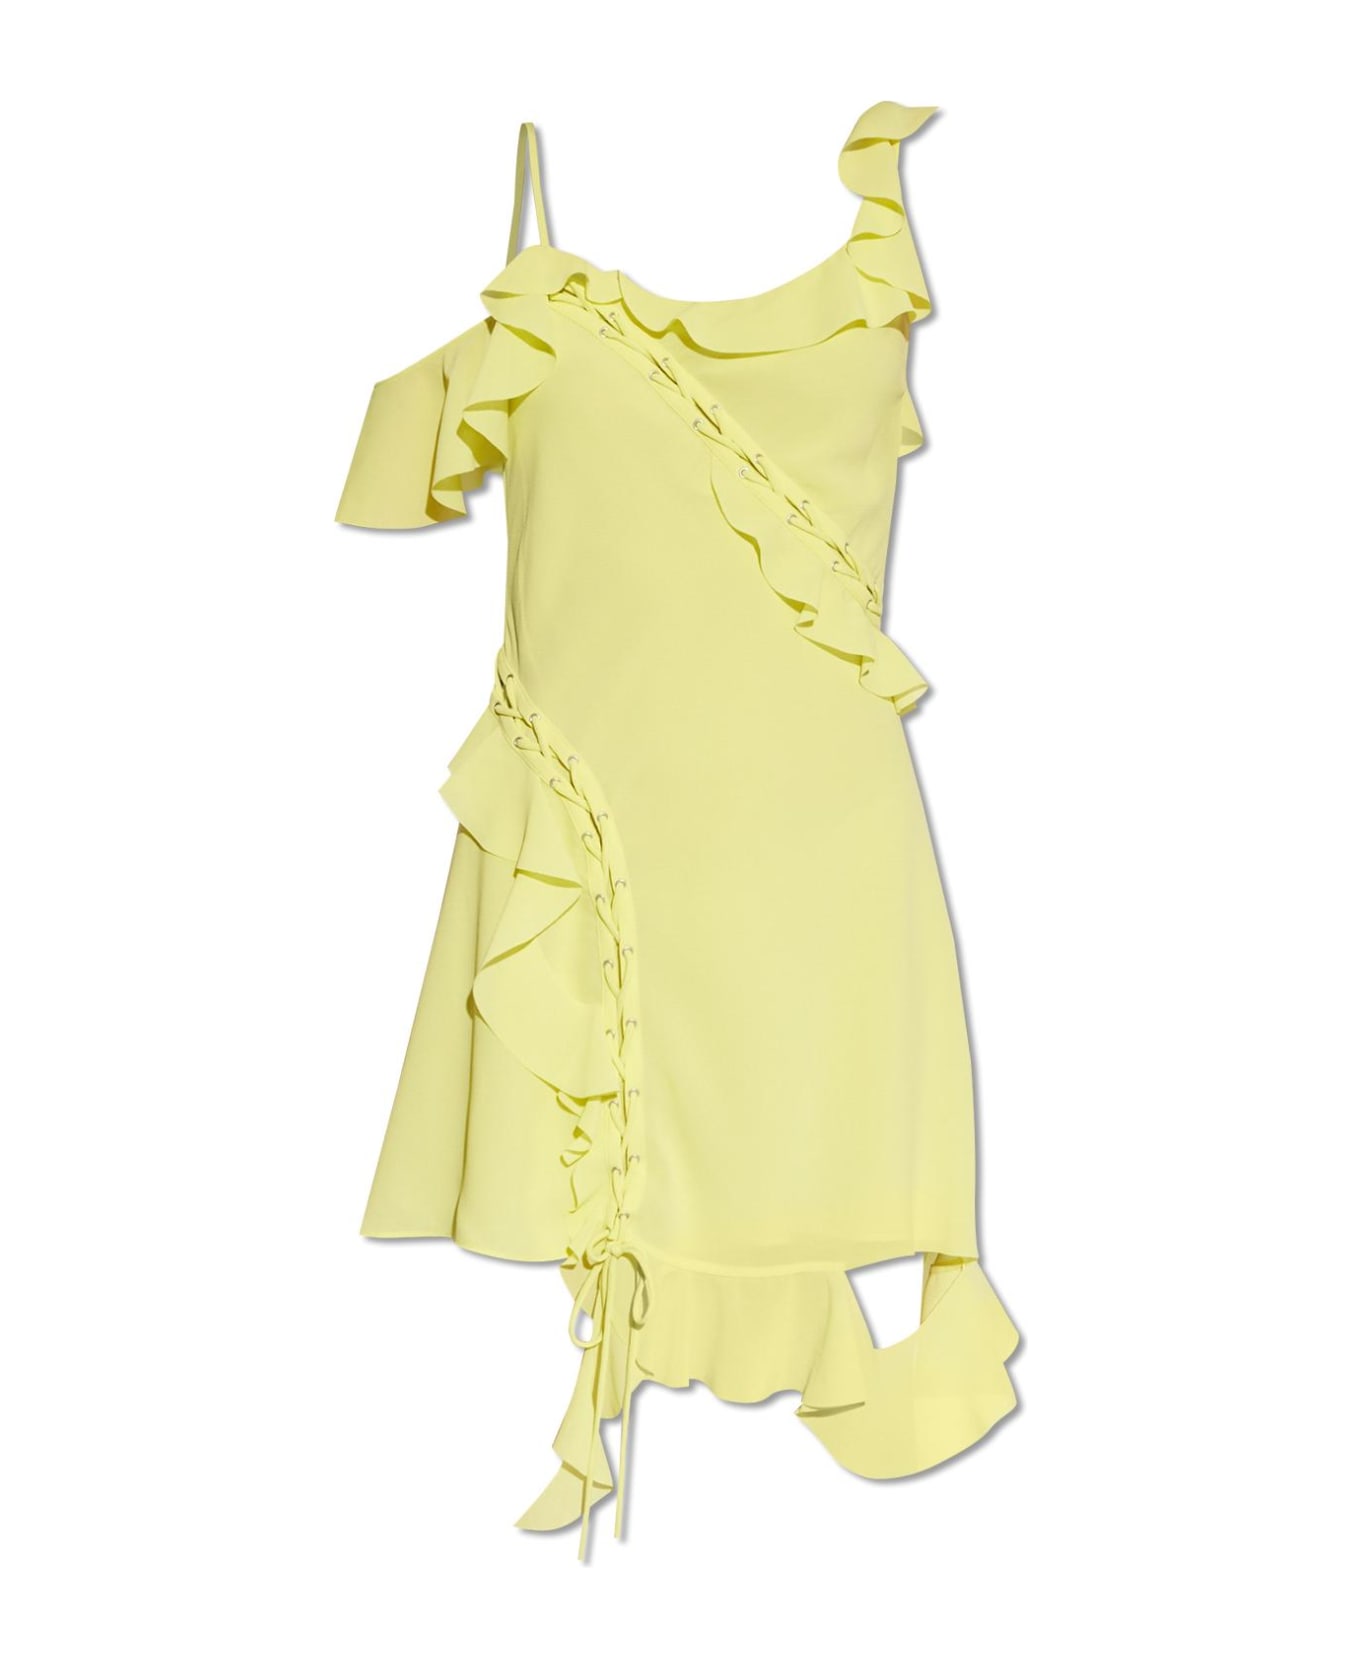 Acne Studios Asymmetrical Dress - Acid yellow